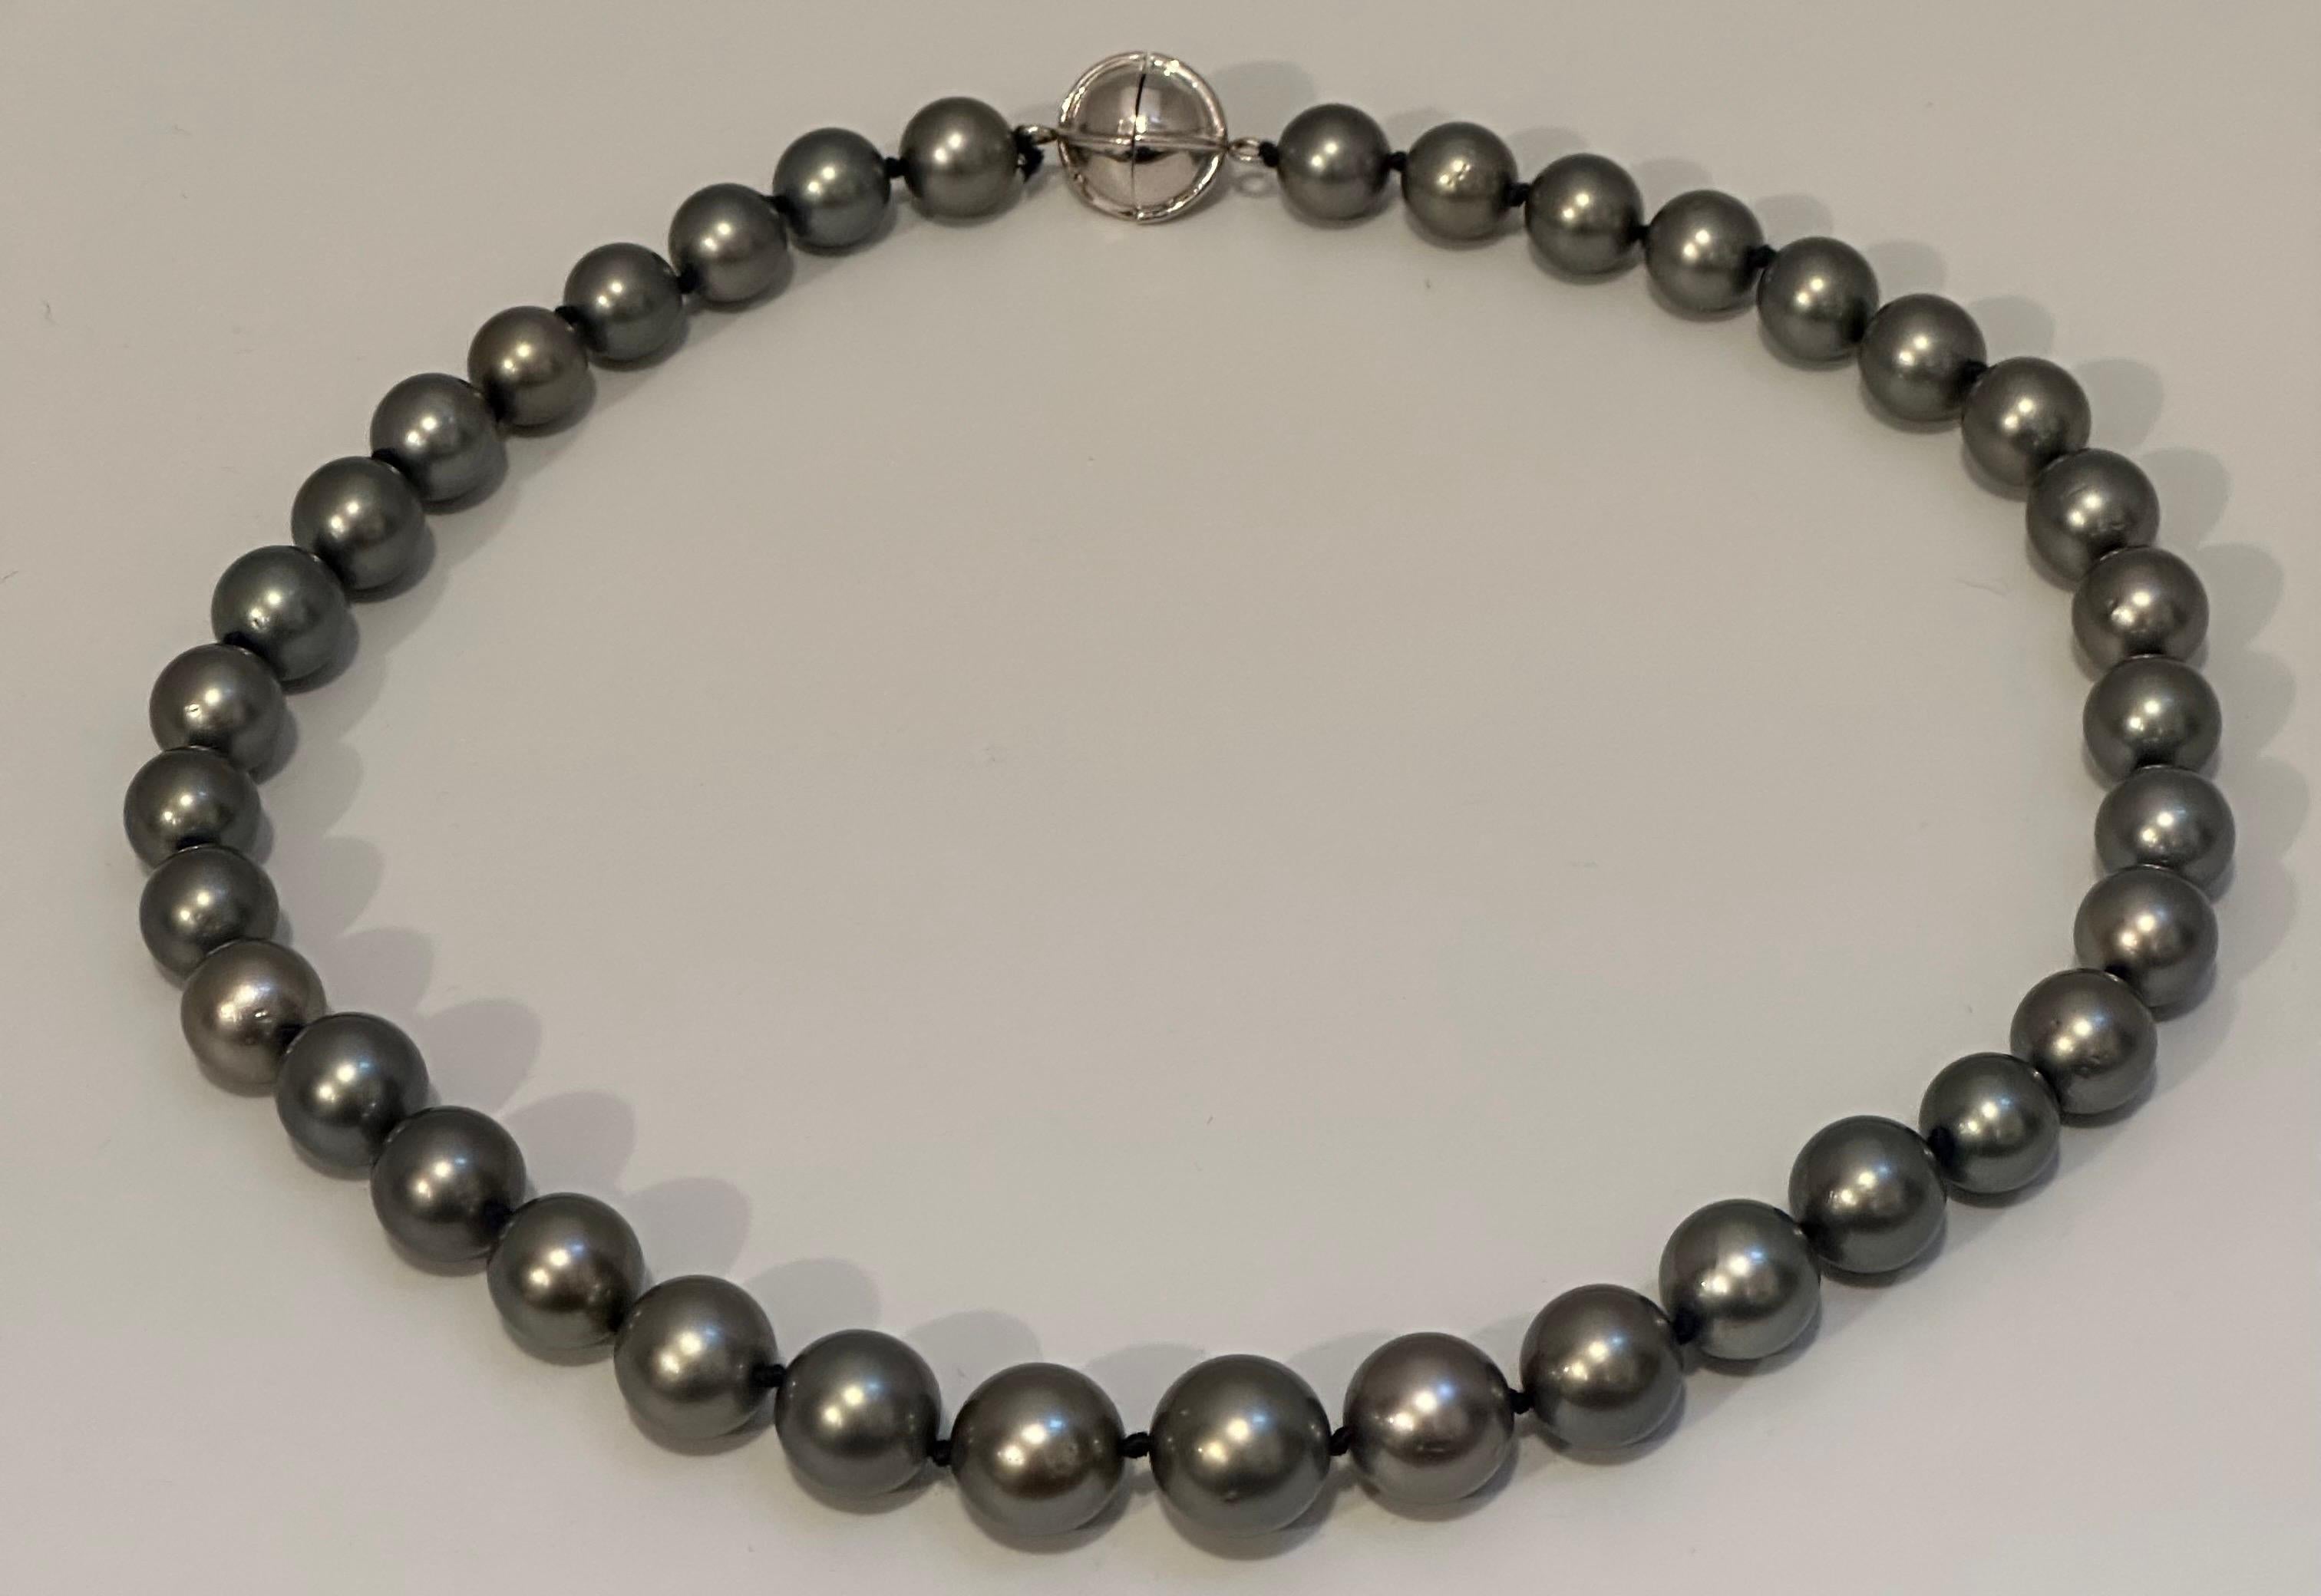 11-15 mm Tahitian Black Graduating Pearls Strand Necklace, Estate, WG 2